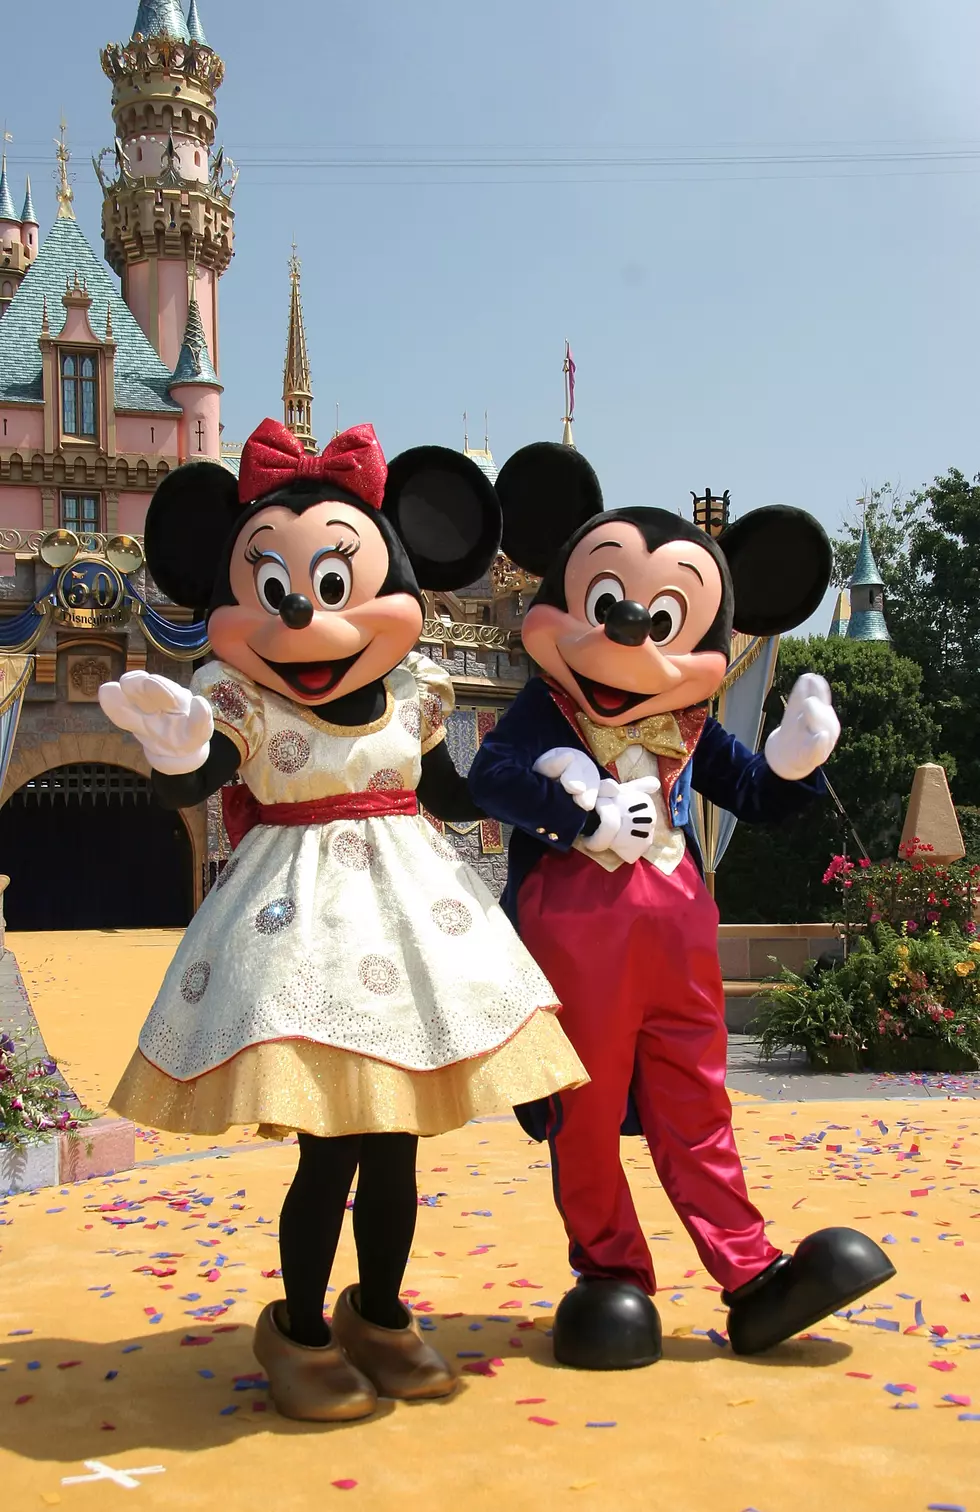 The Original “Magic Kingdom” Disneyland Celebrates 60 Years